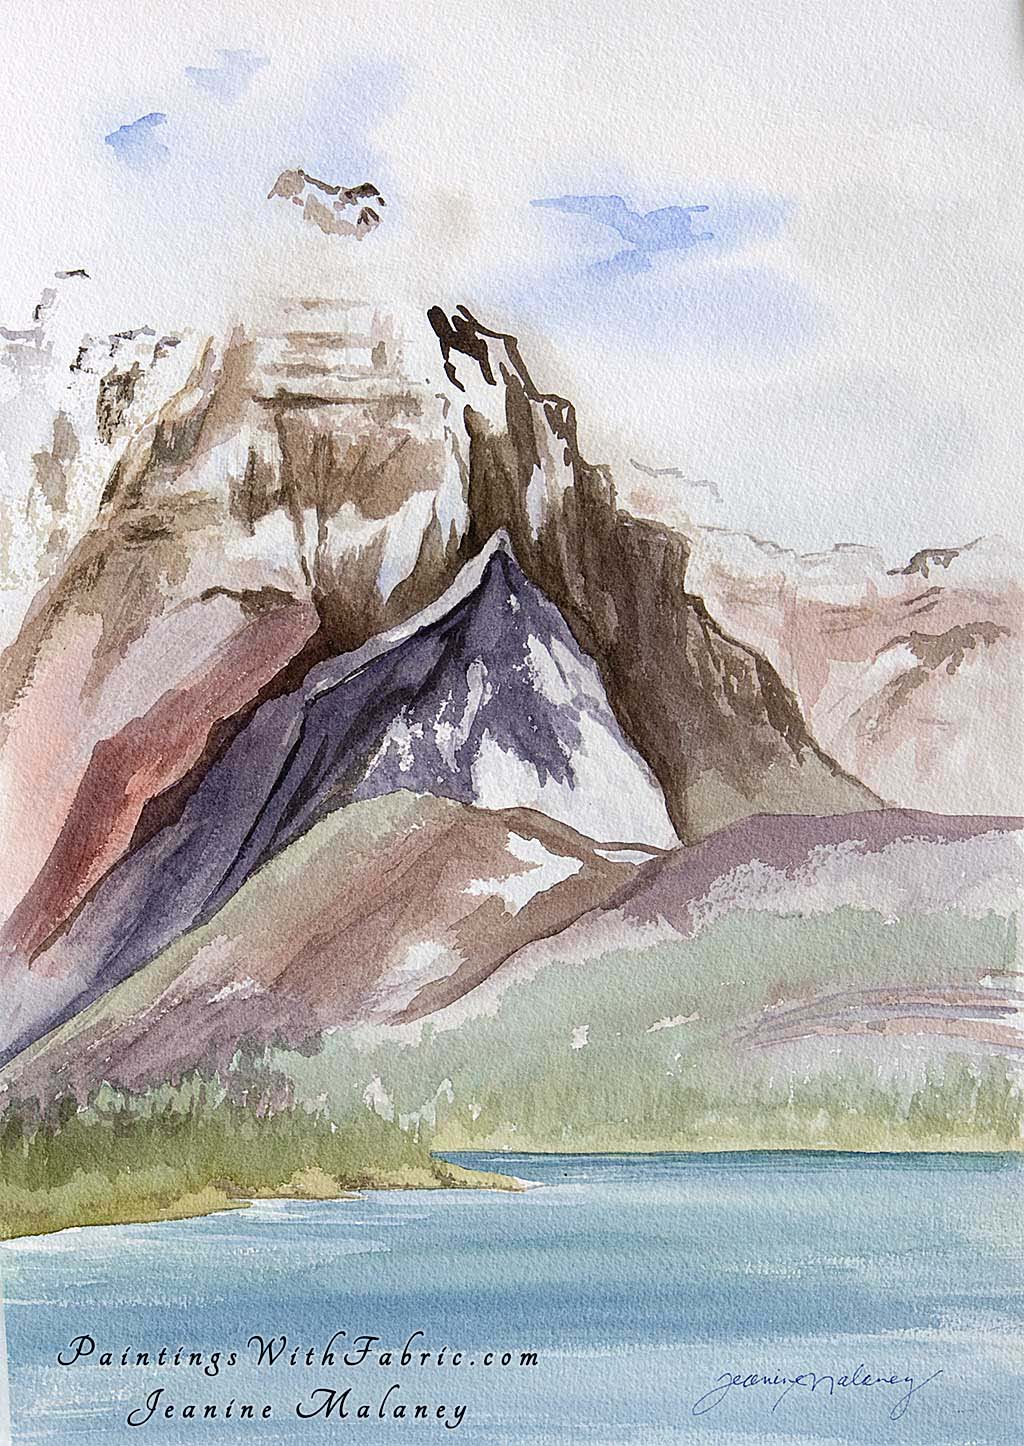 Many Glacier Unframed Original Watercolor Painting of a western mountain landscape of Glacier National Park